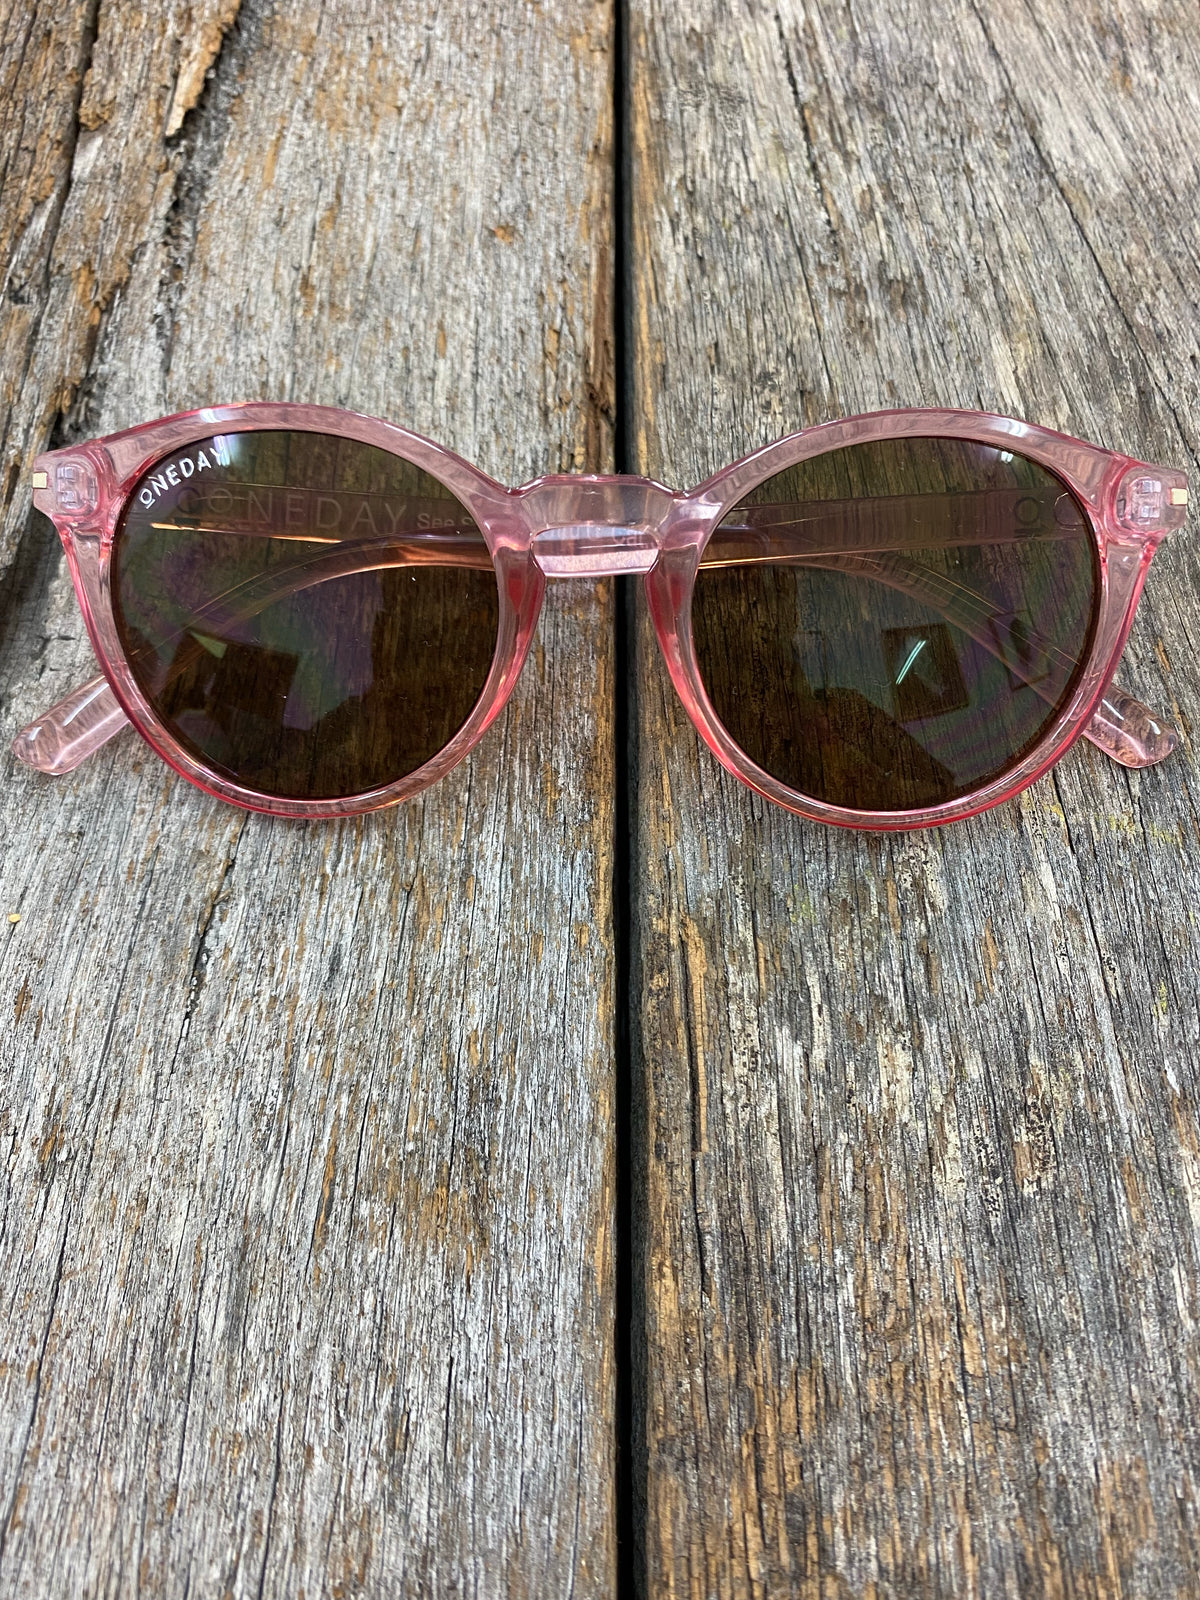 See Straight Thru U Sunglasses - Pink and Brown